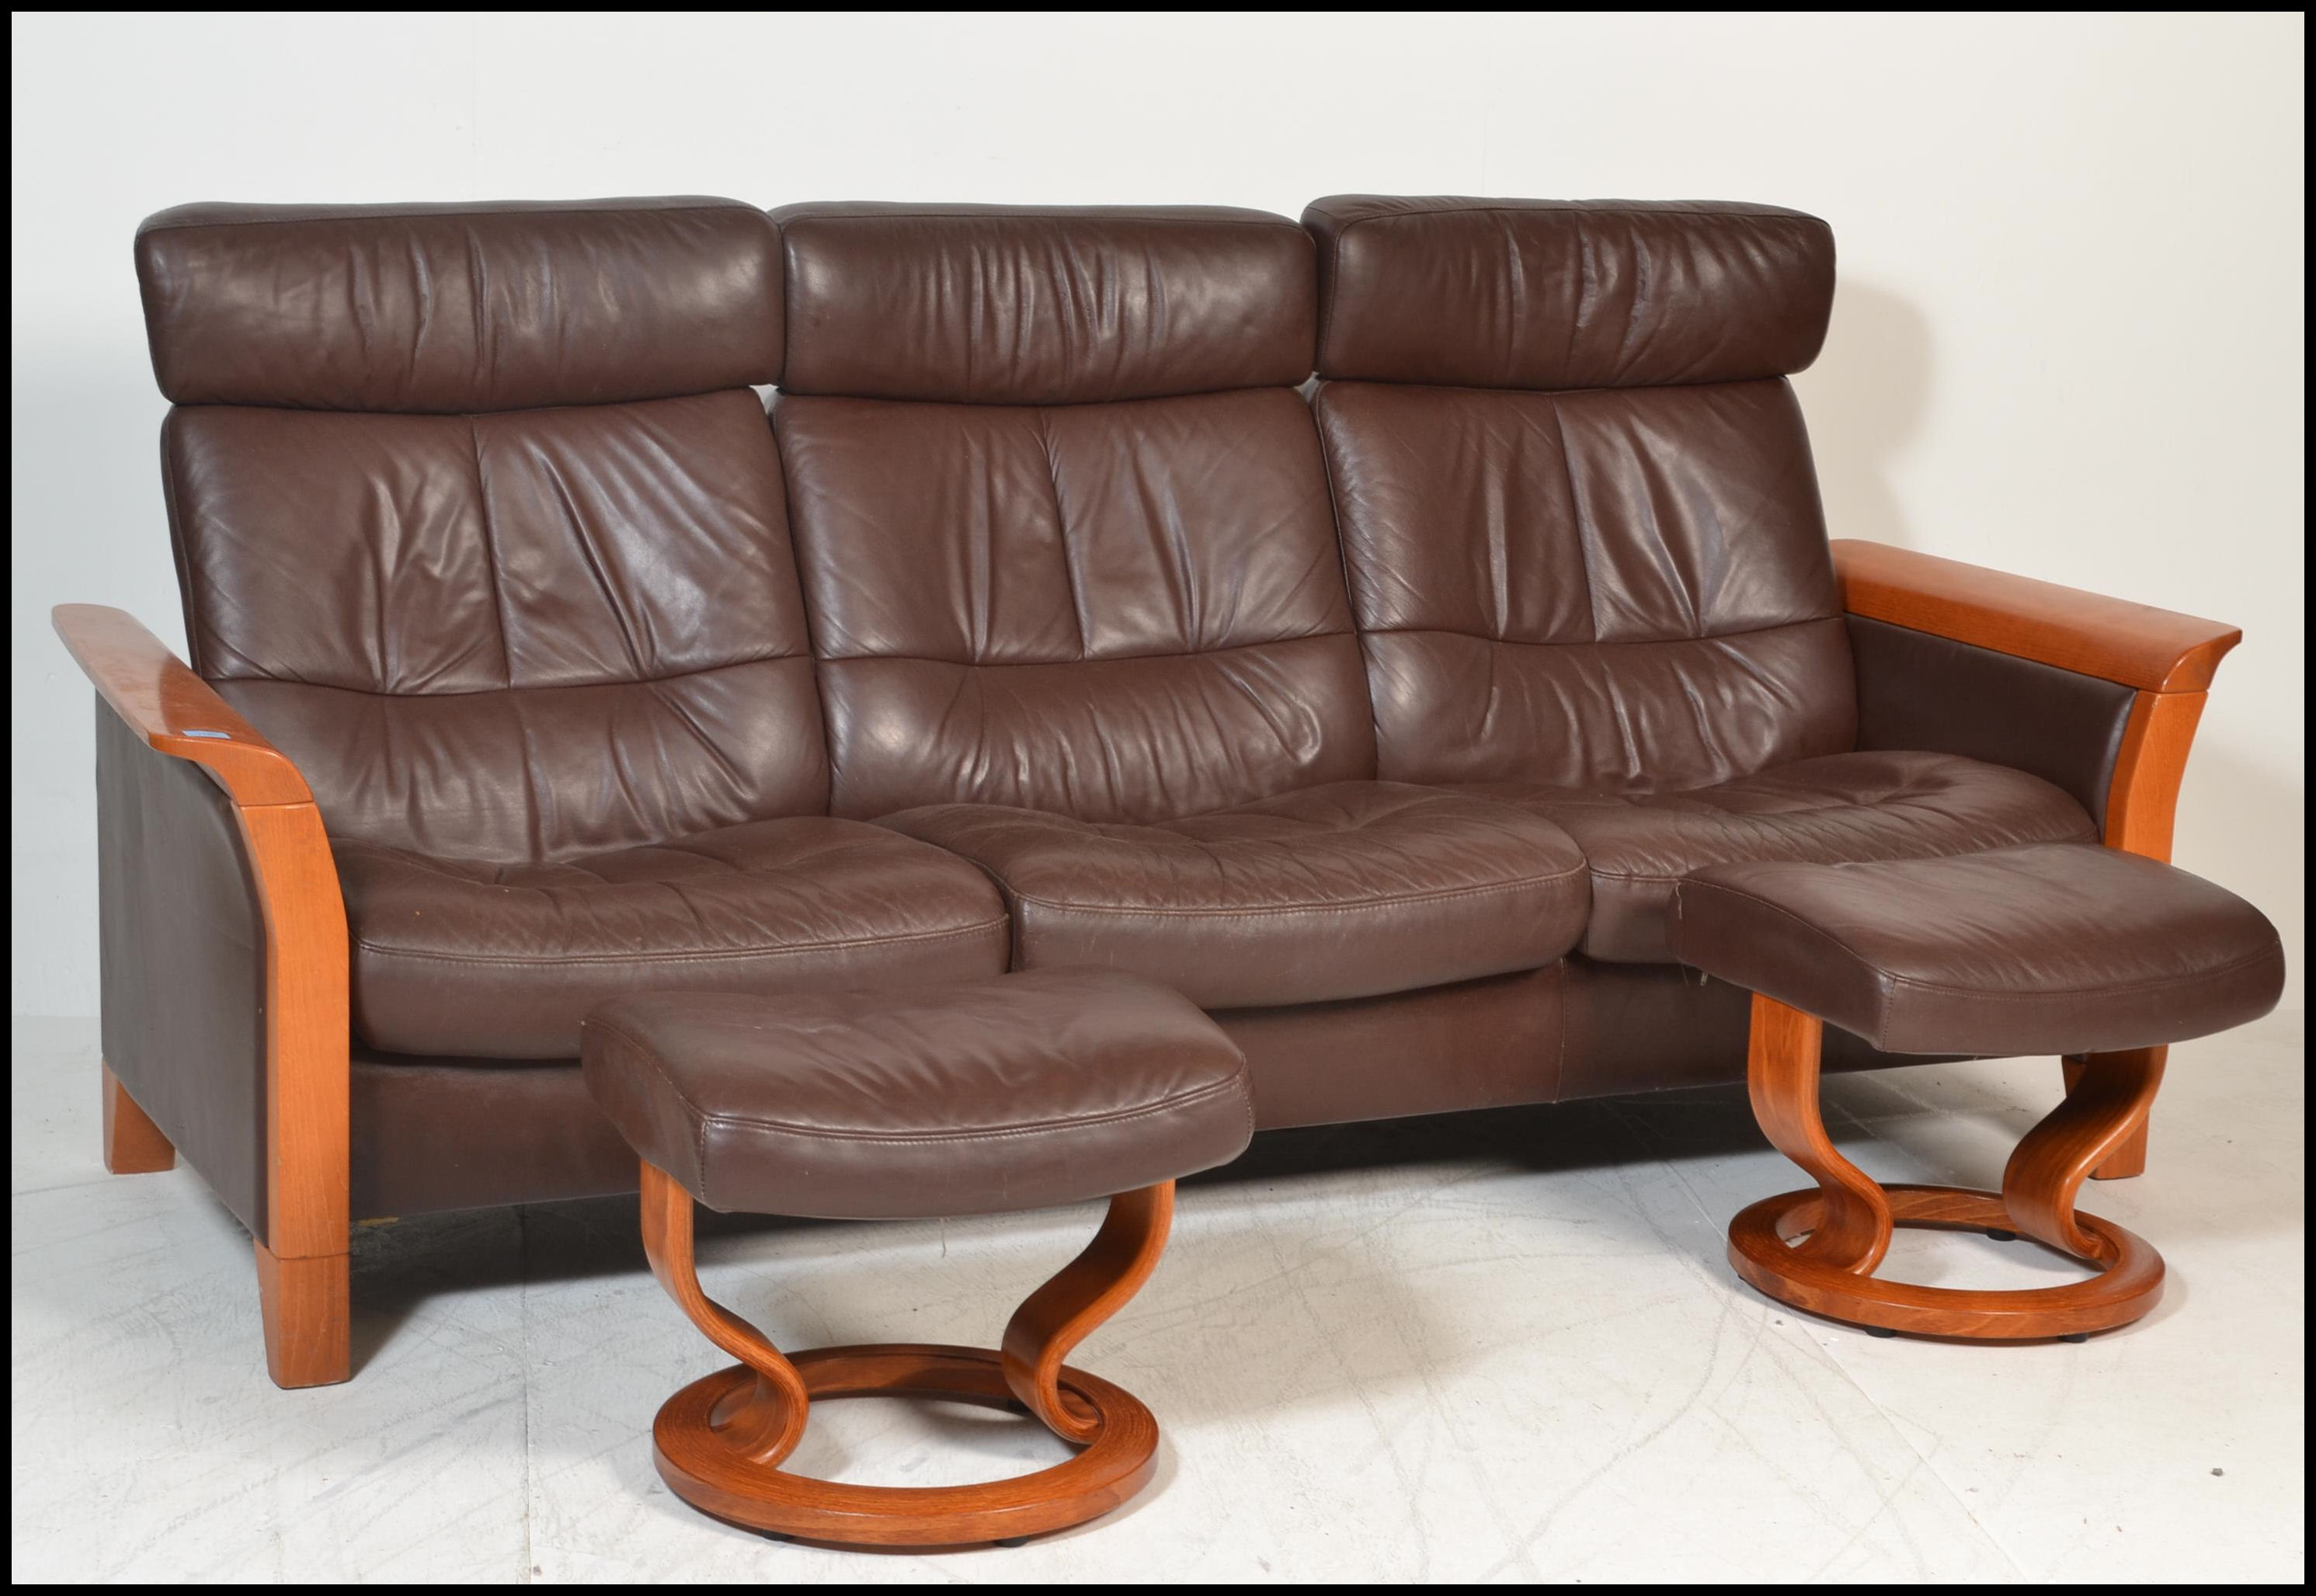 An Ekornes Stressless three seater brown leather Reclining Sofa of Scandinavian design, having - Image 2 of 6